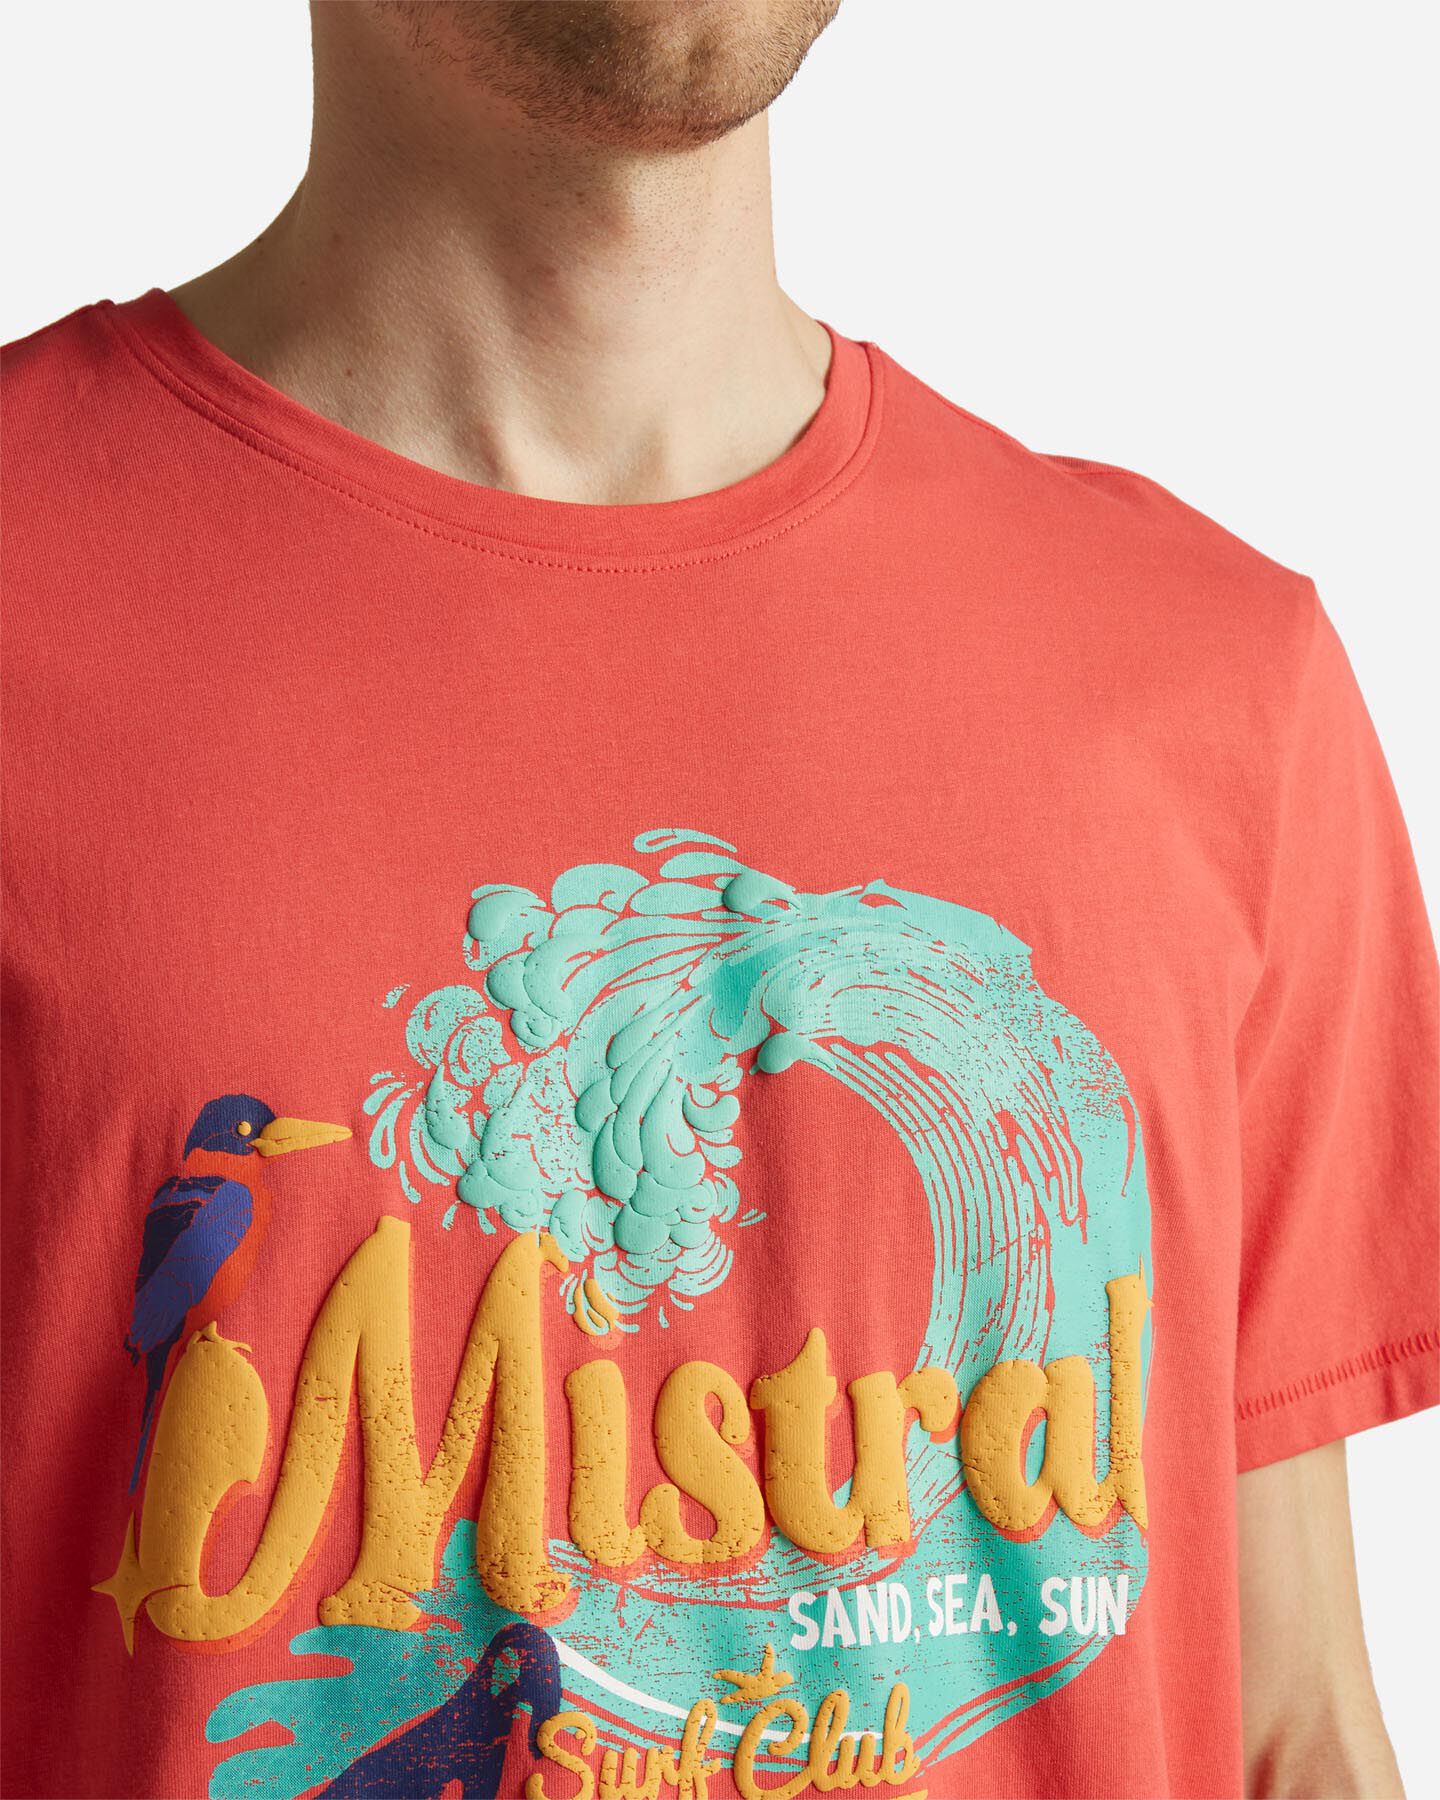  T-Shirt MISTRAL SAND SEA SUN M S4130261|256|S scatto 4